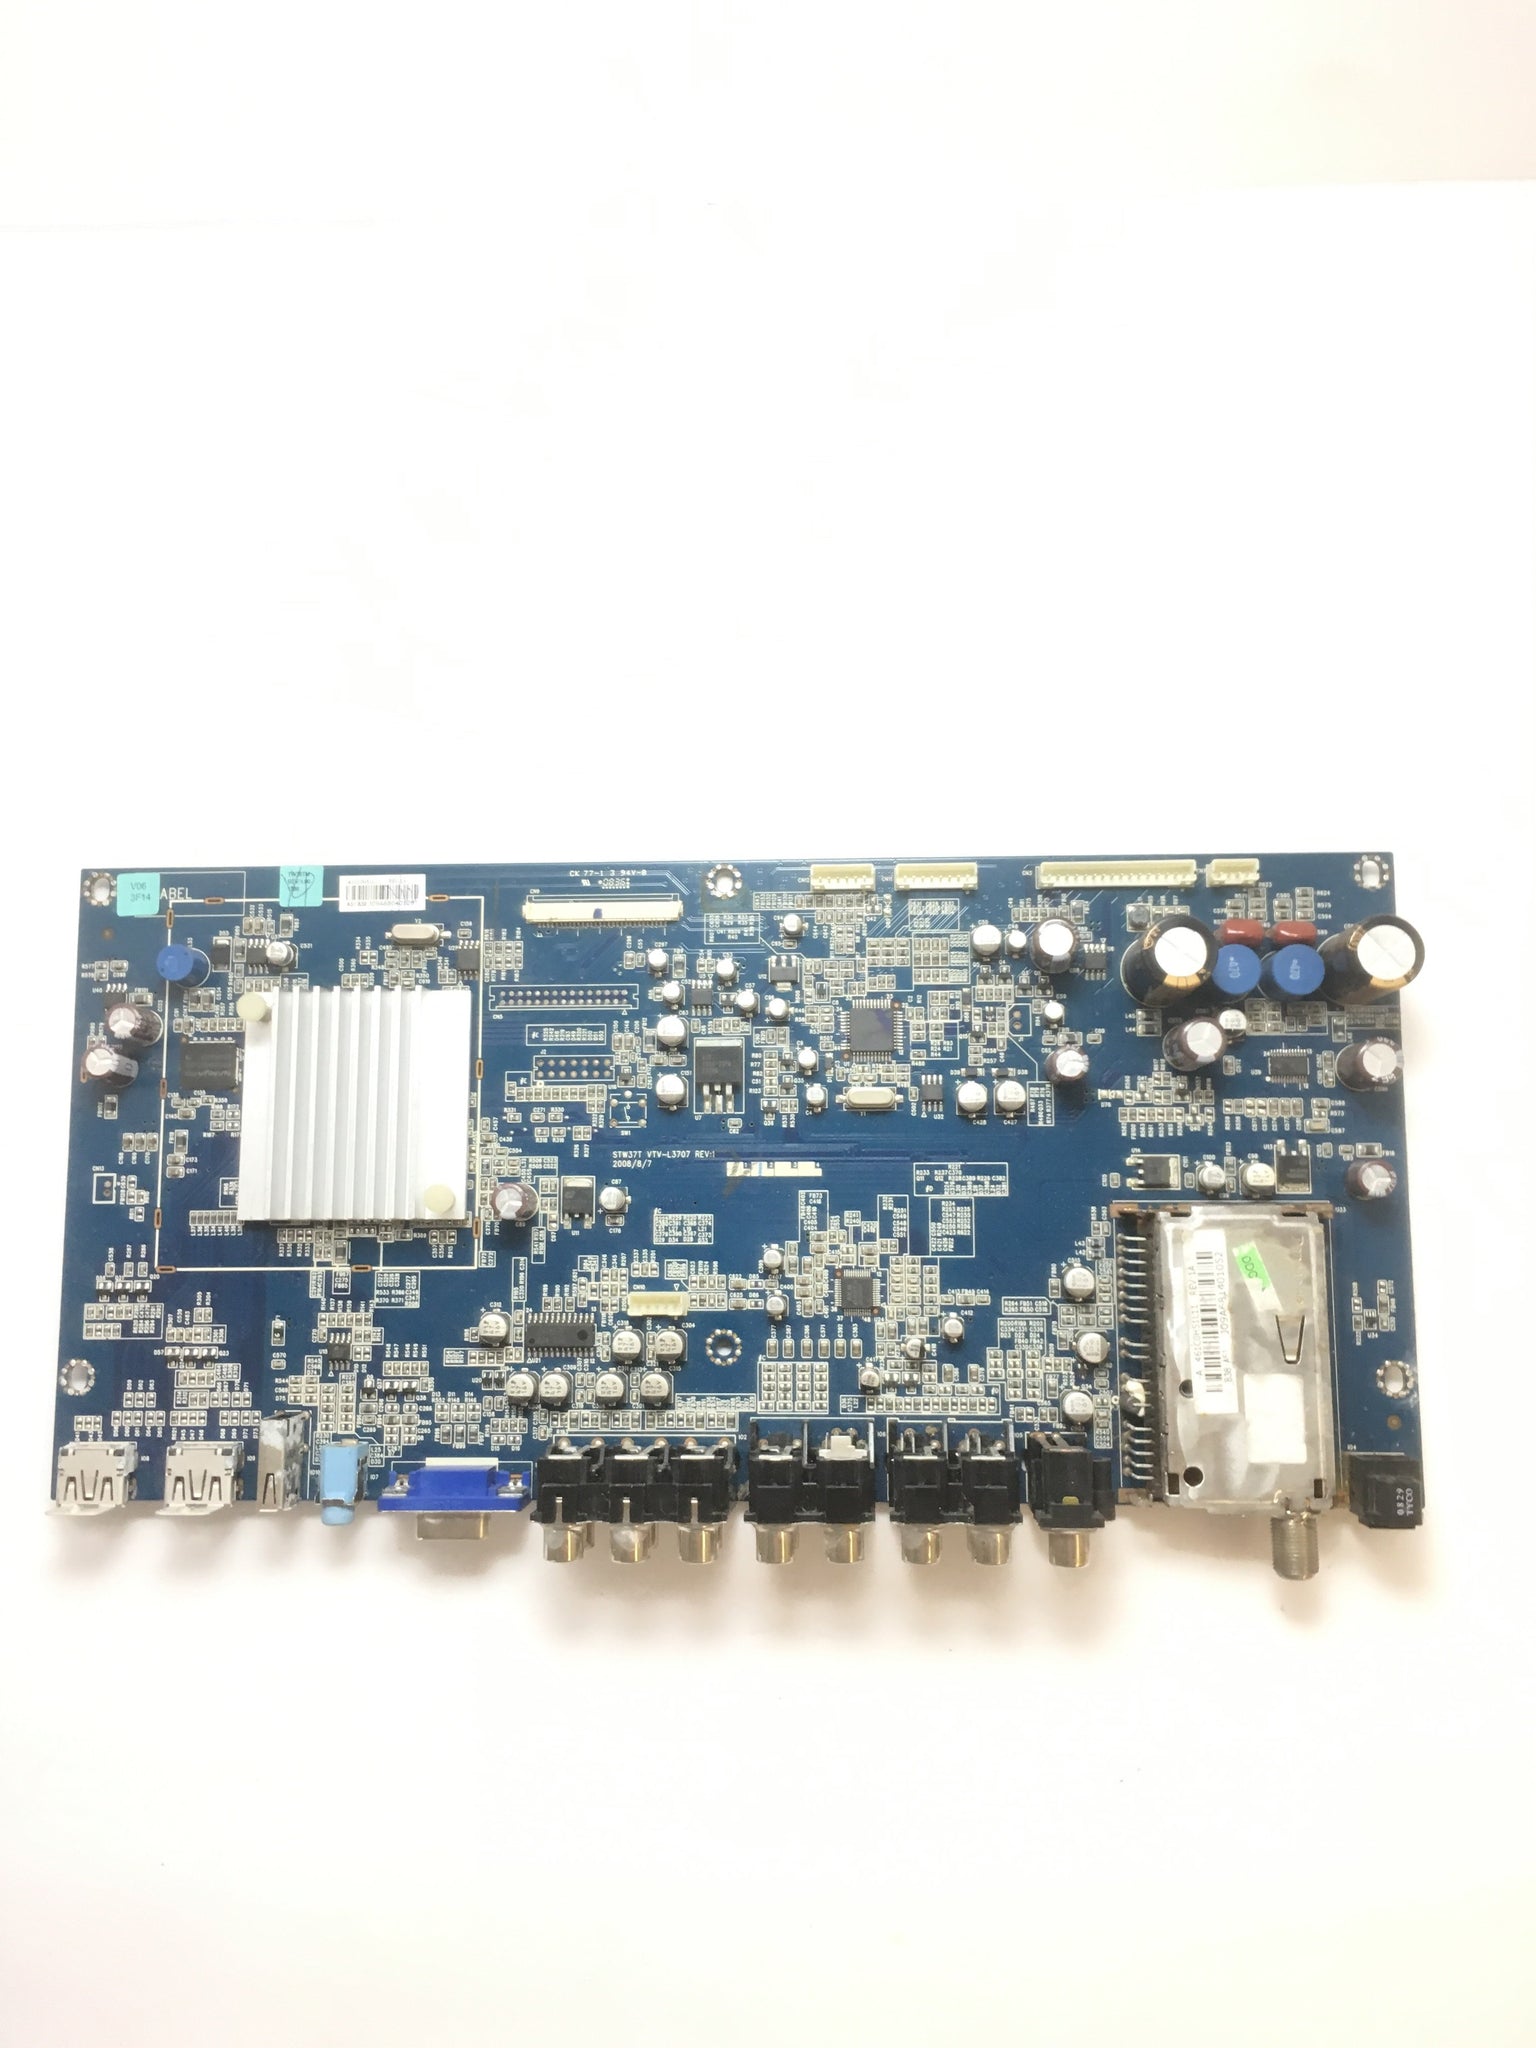 Toshiba 75012905 (431C0H51L11) Main Board